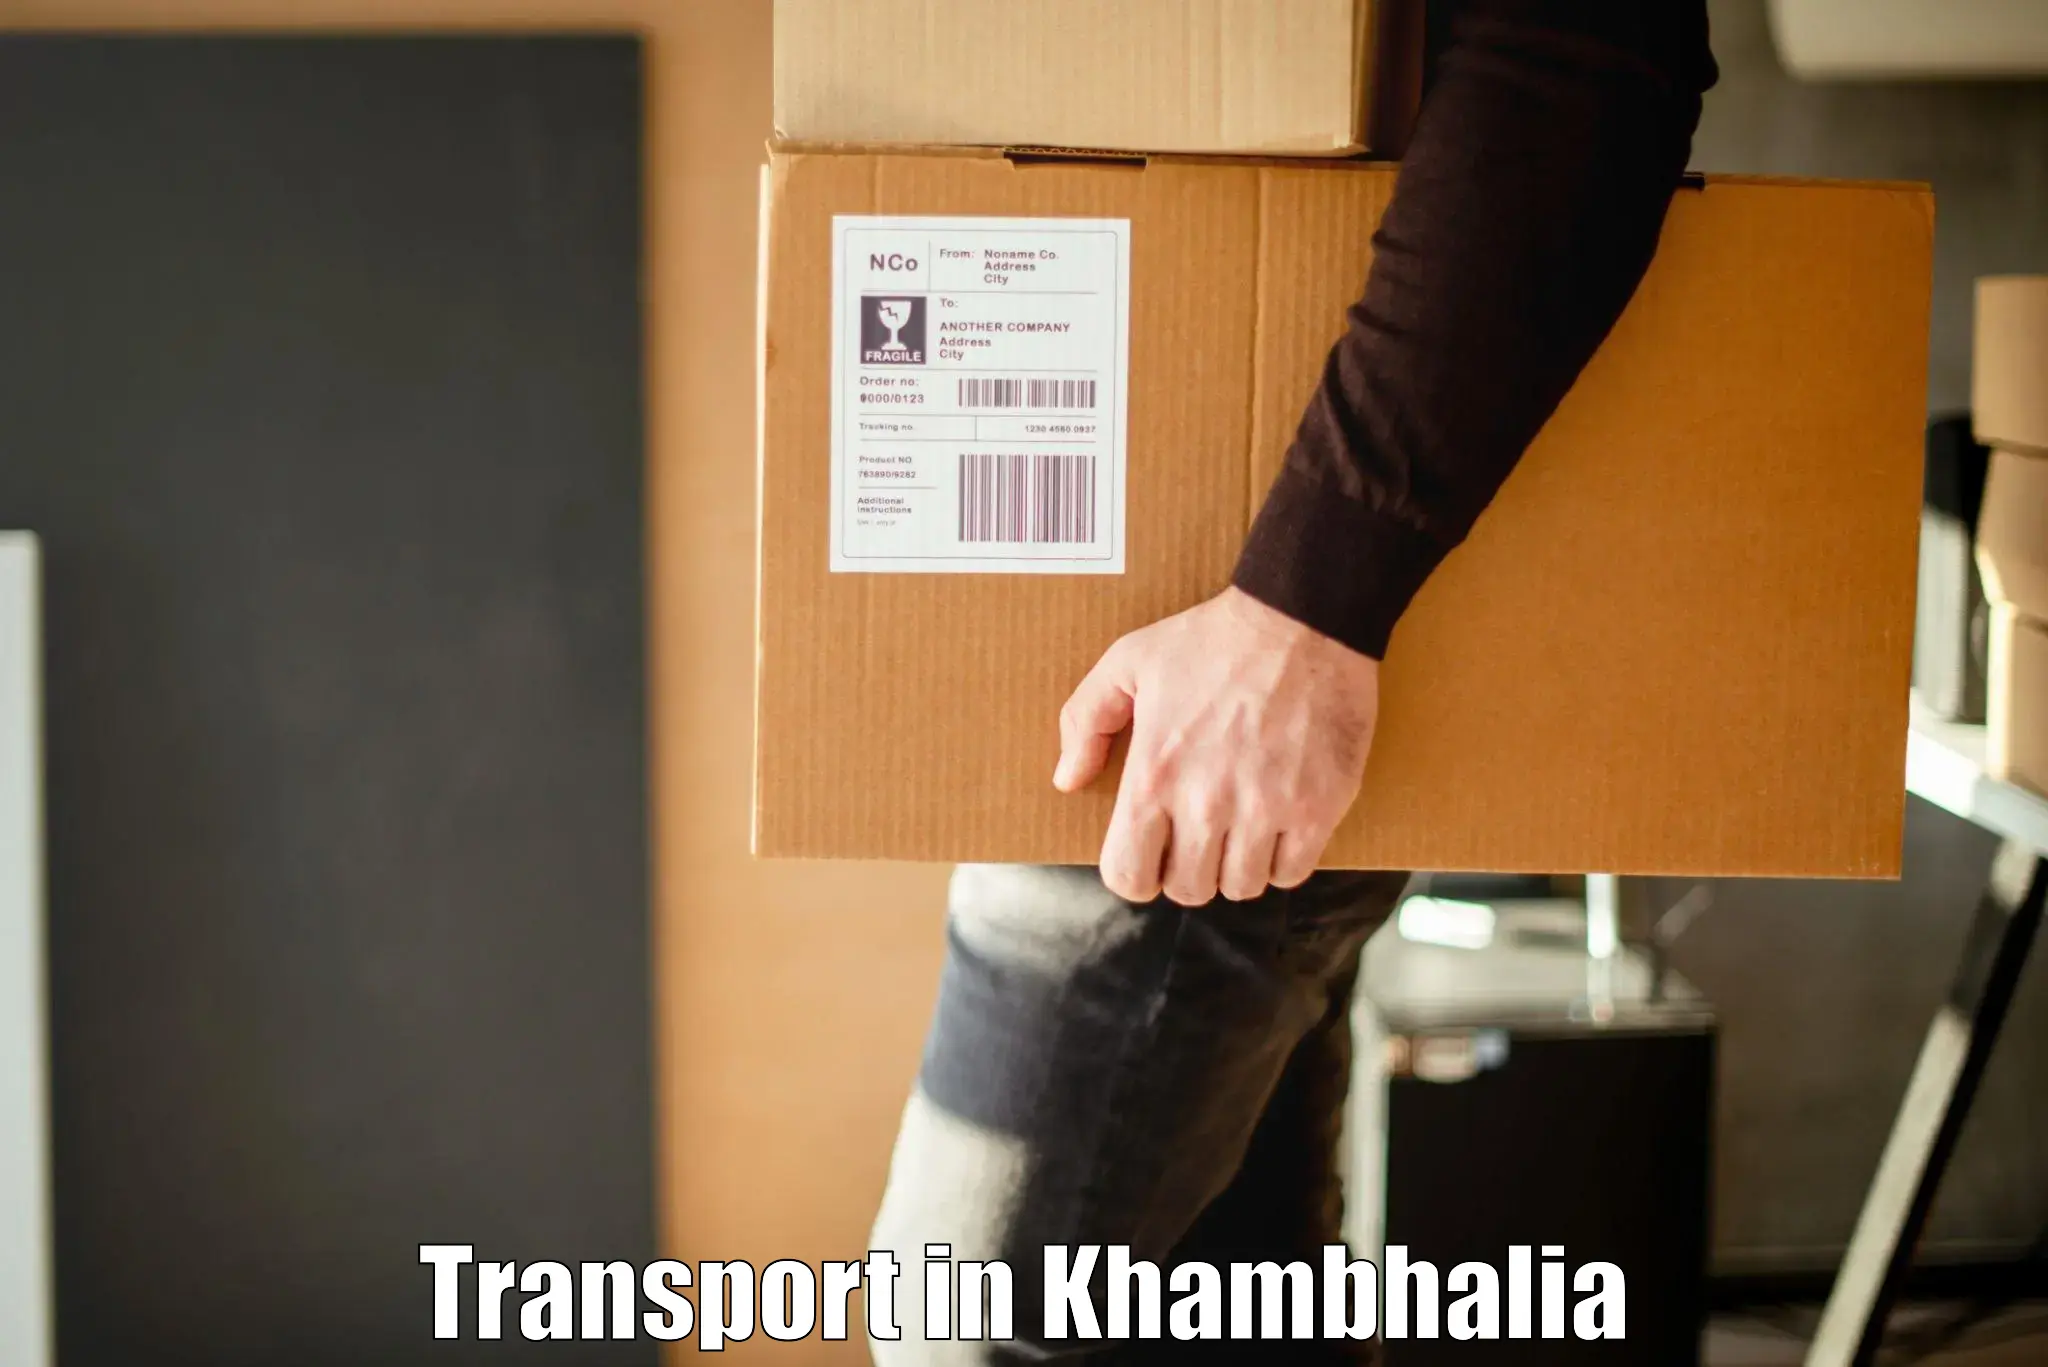 Transportation services in Khambhalia